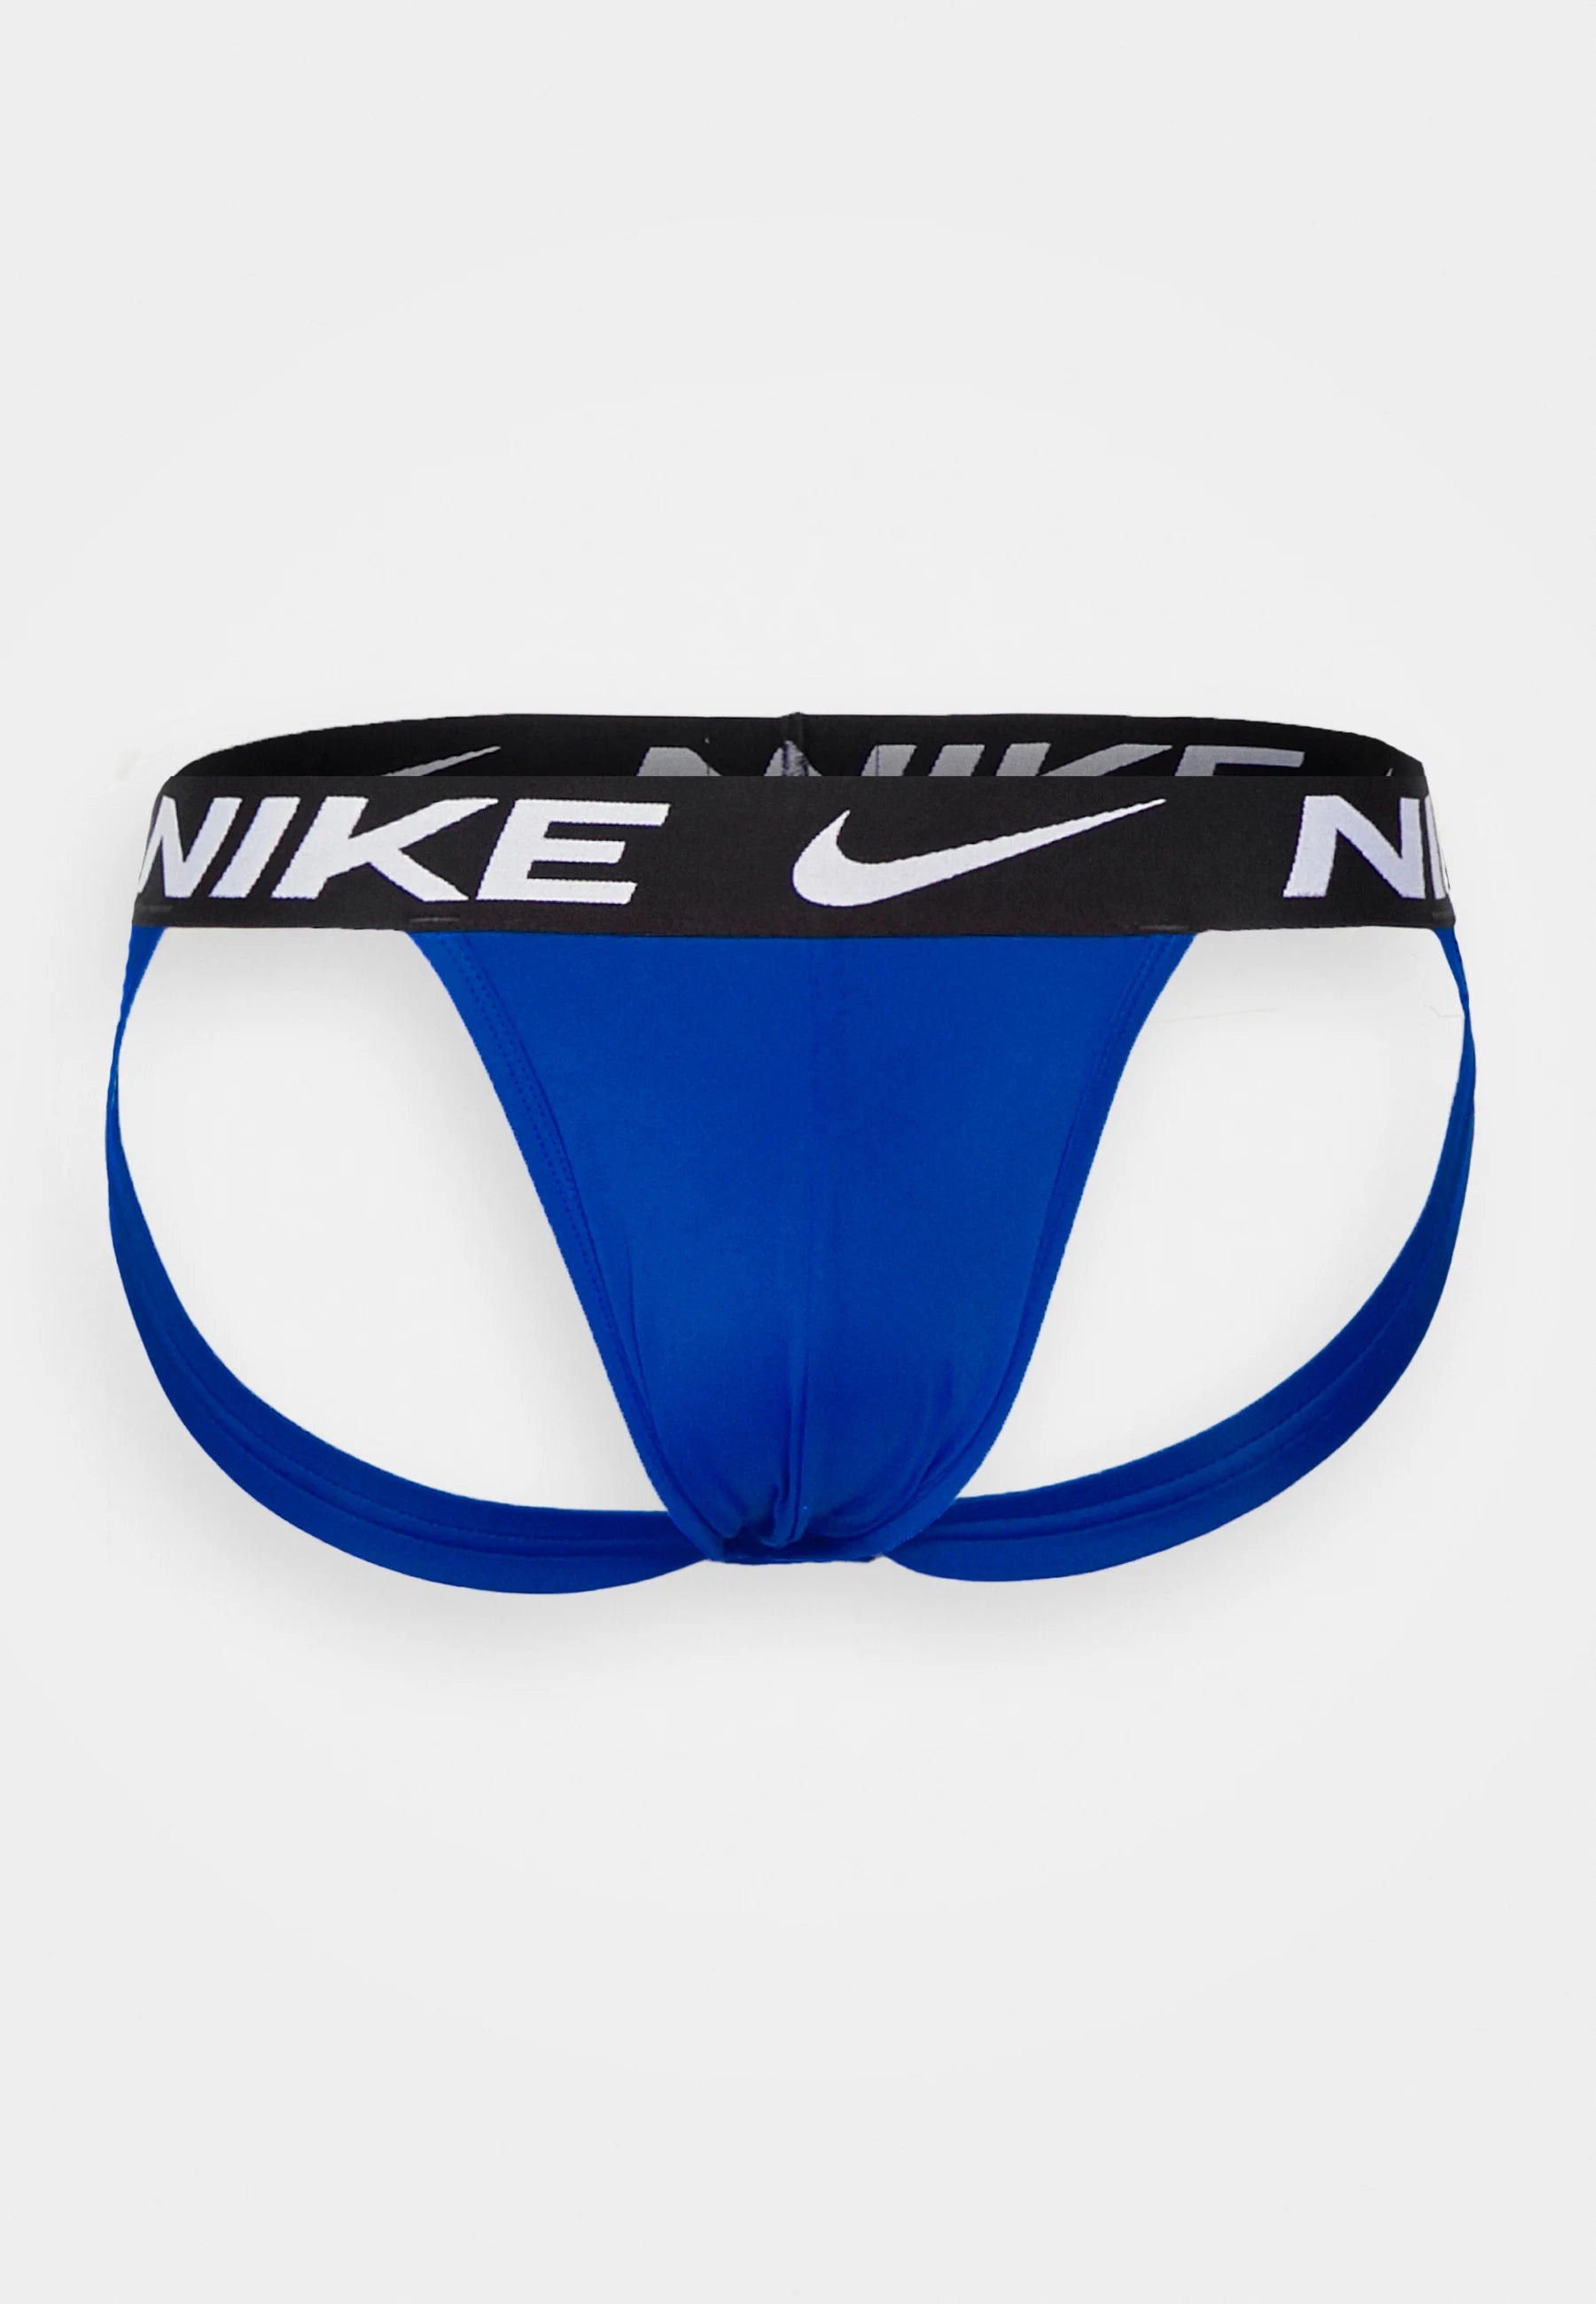 Nike Jockstraps Panties, 3er Pack